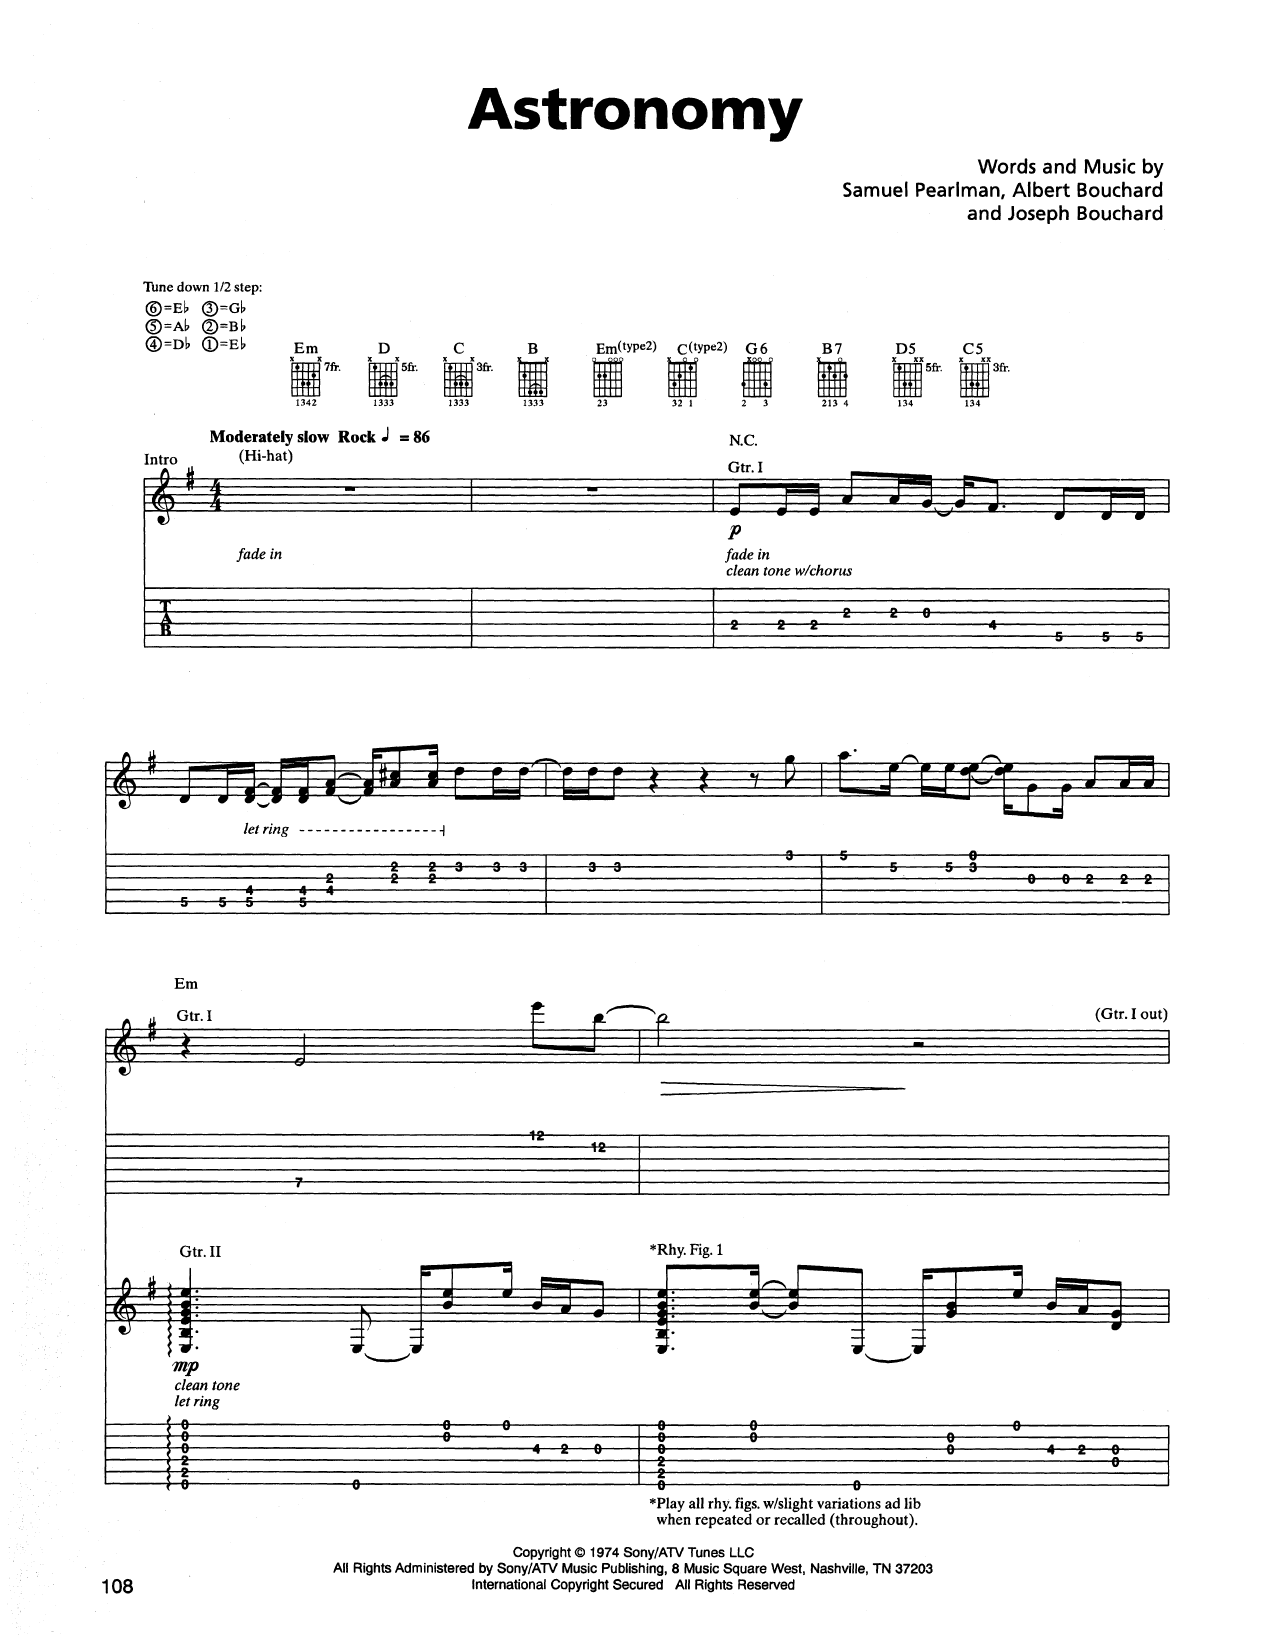 Metallica Astronomy Sheet Music Notes & Chords for Lyrics & Chords - Download or Print PDF